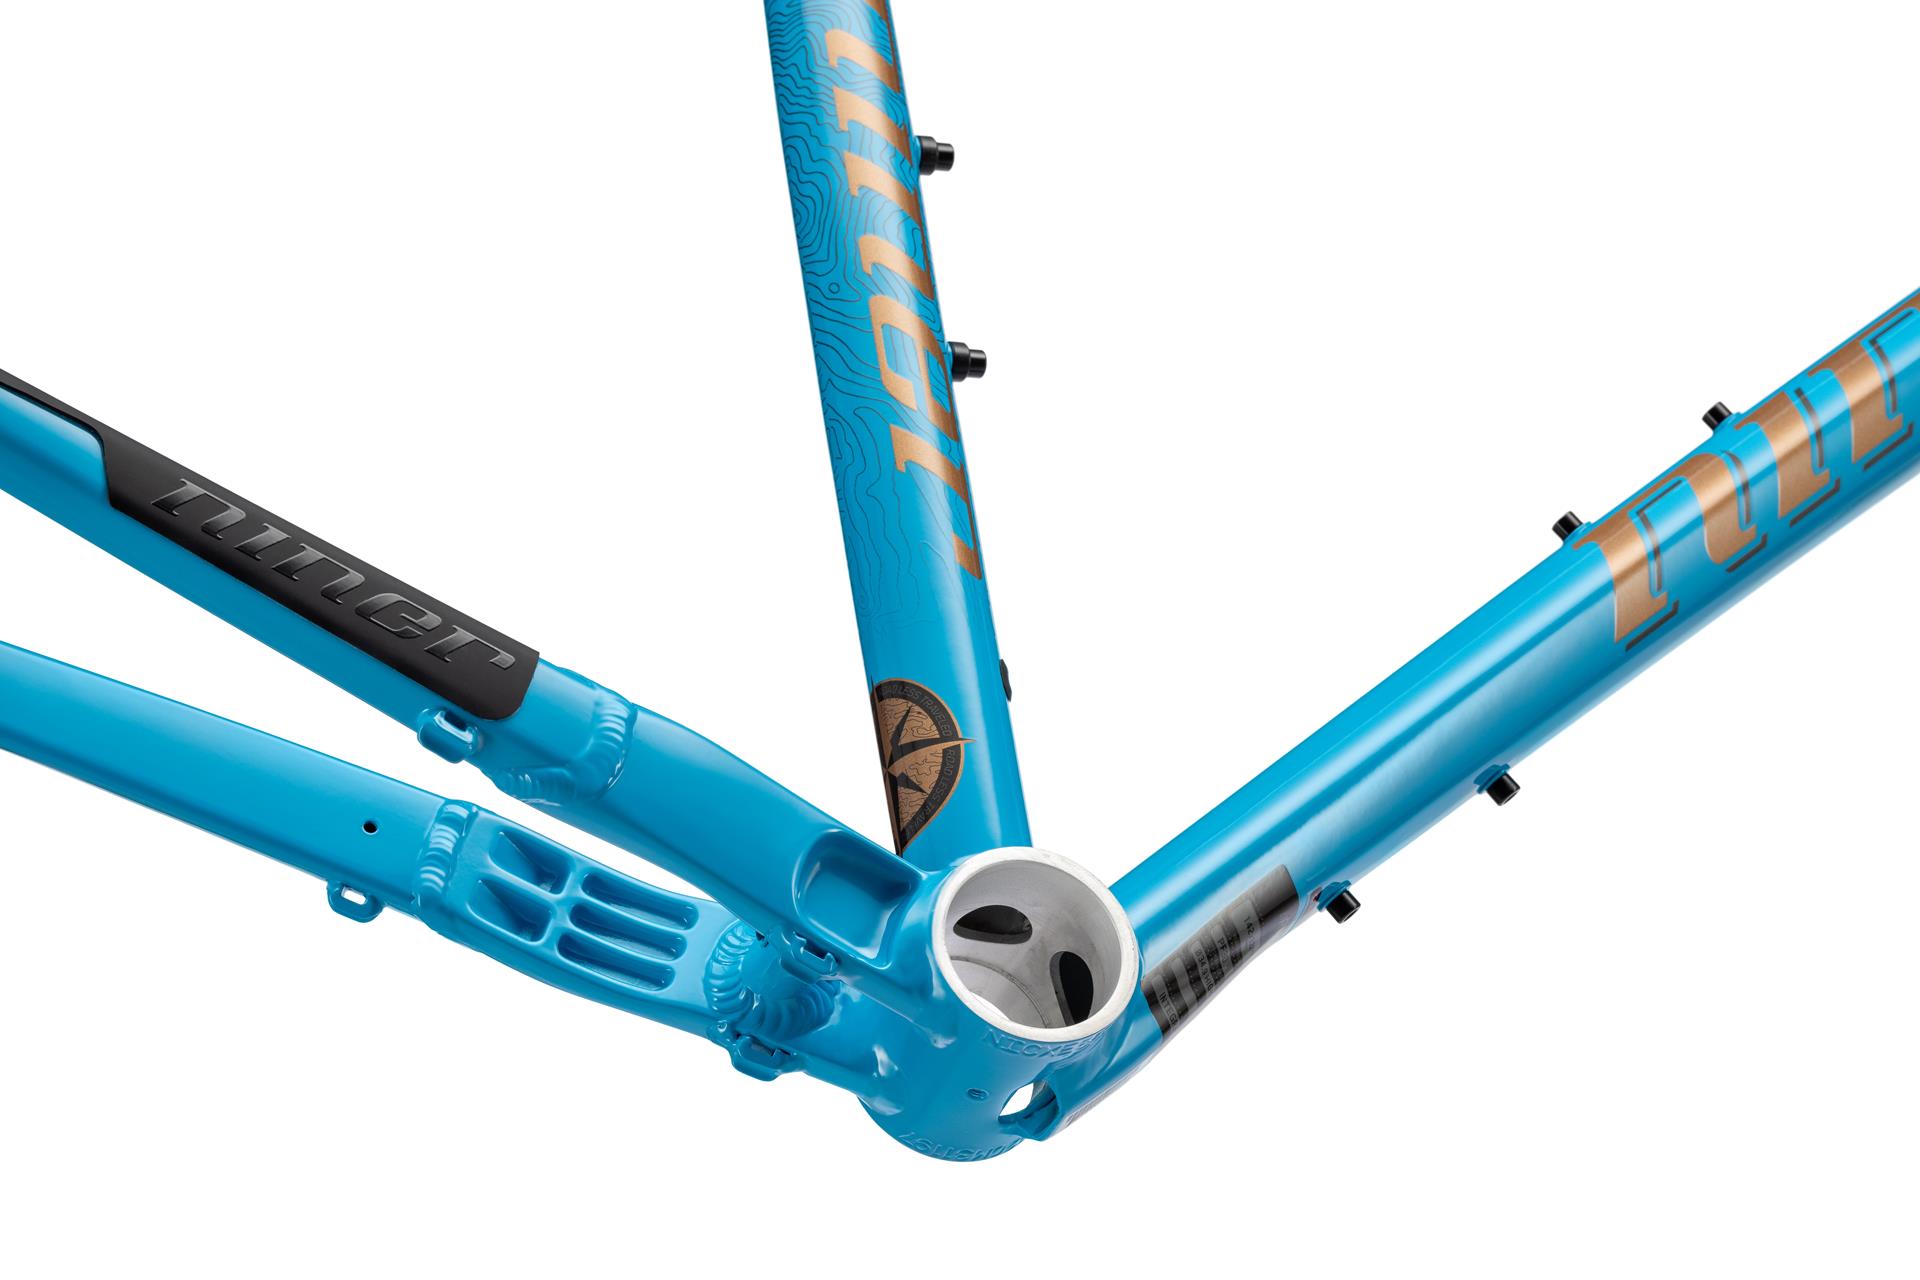 Niner RLT 4-star велосипед, серый/голубой, 56